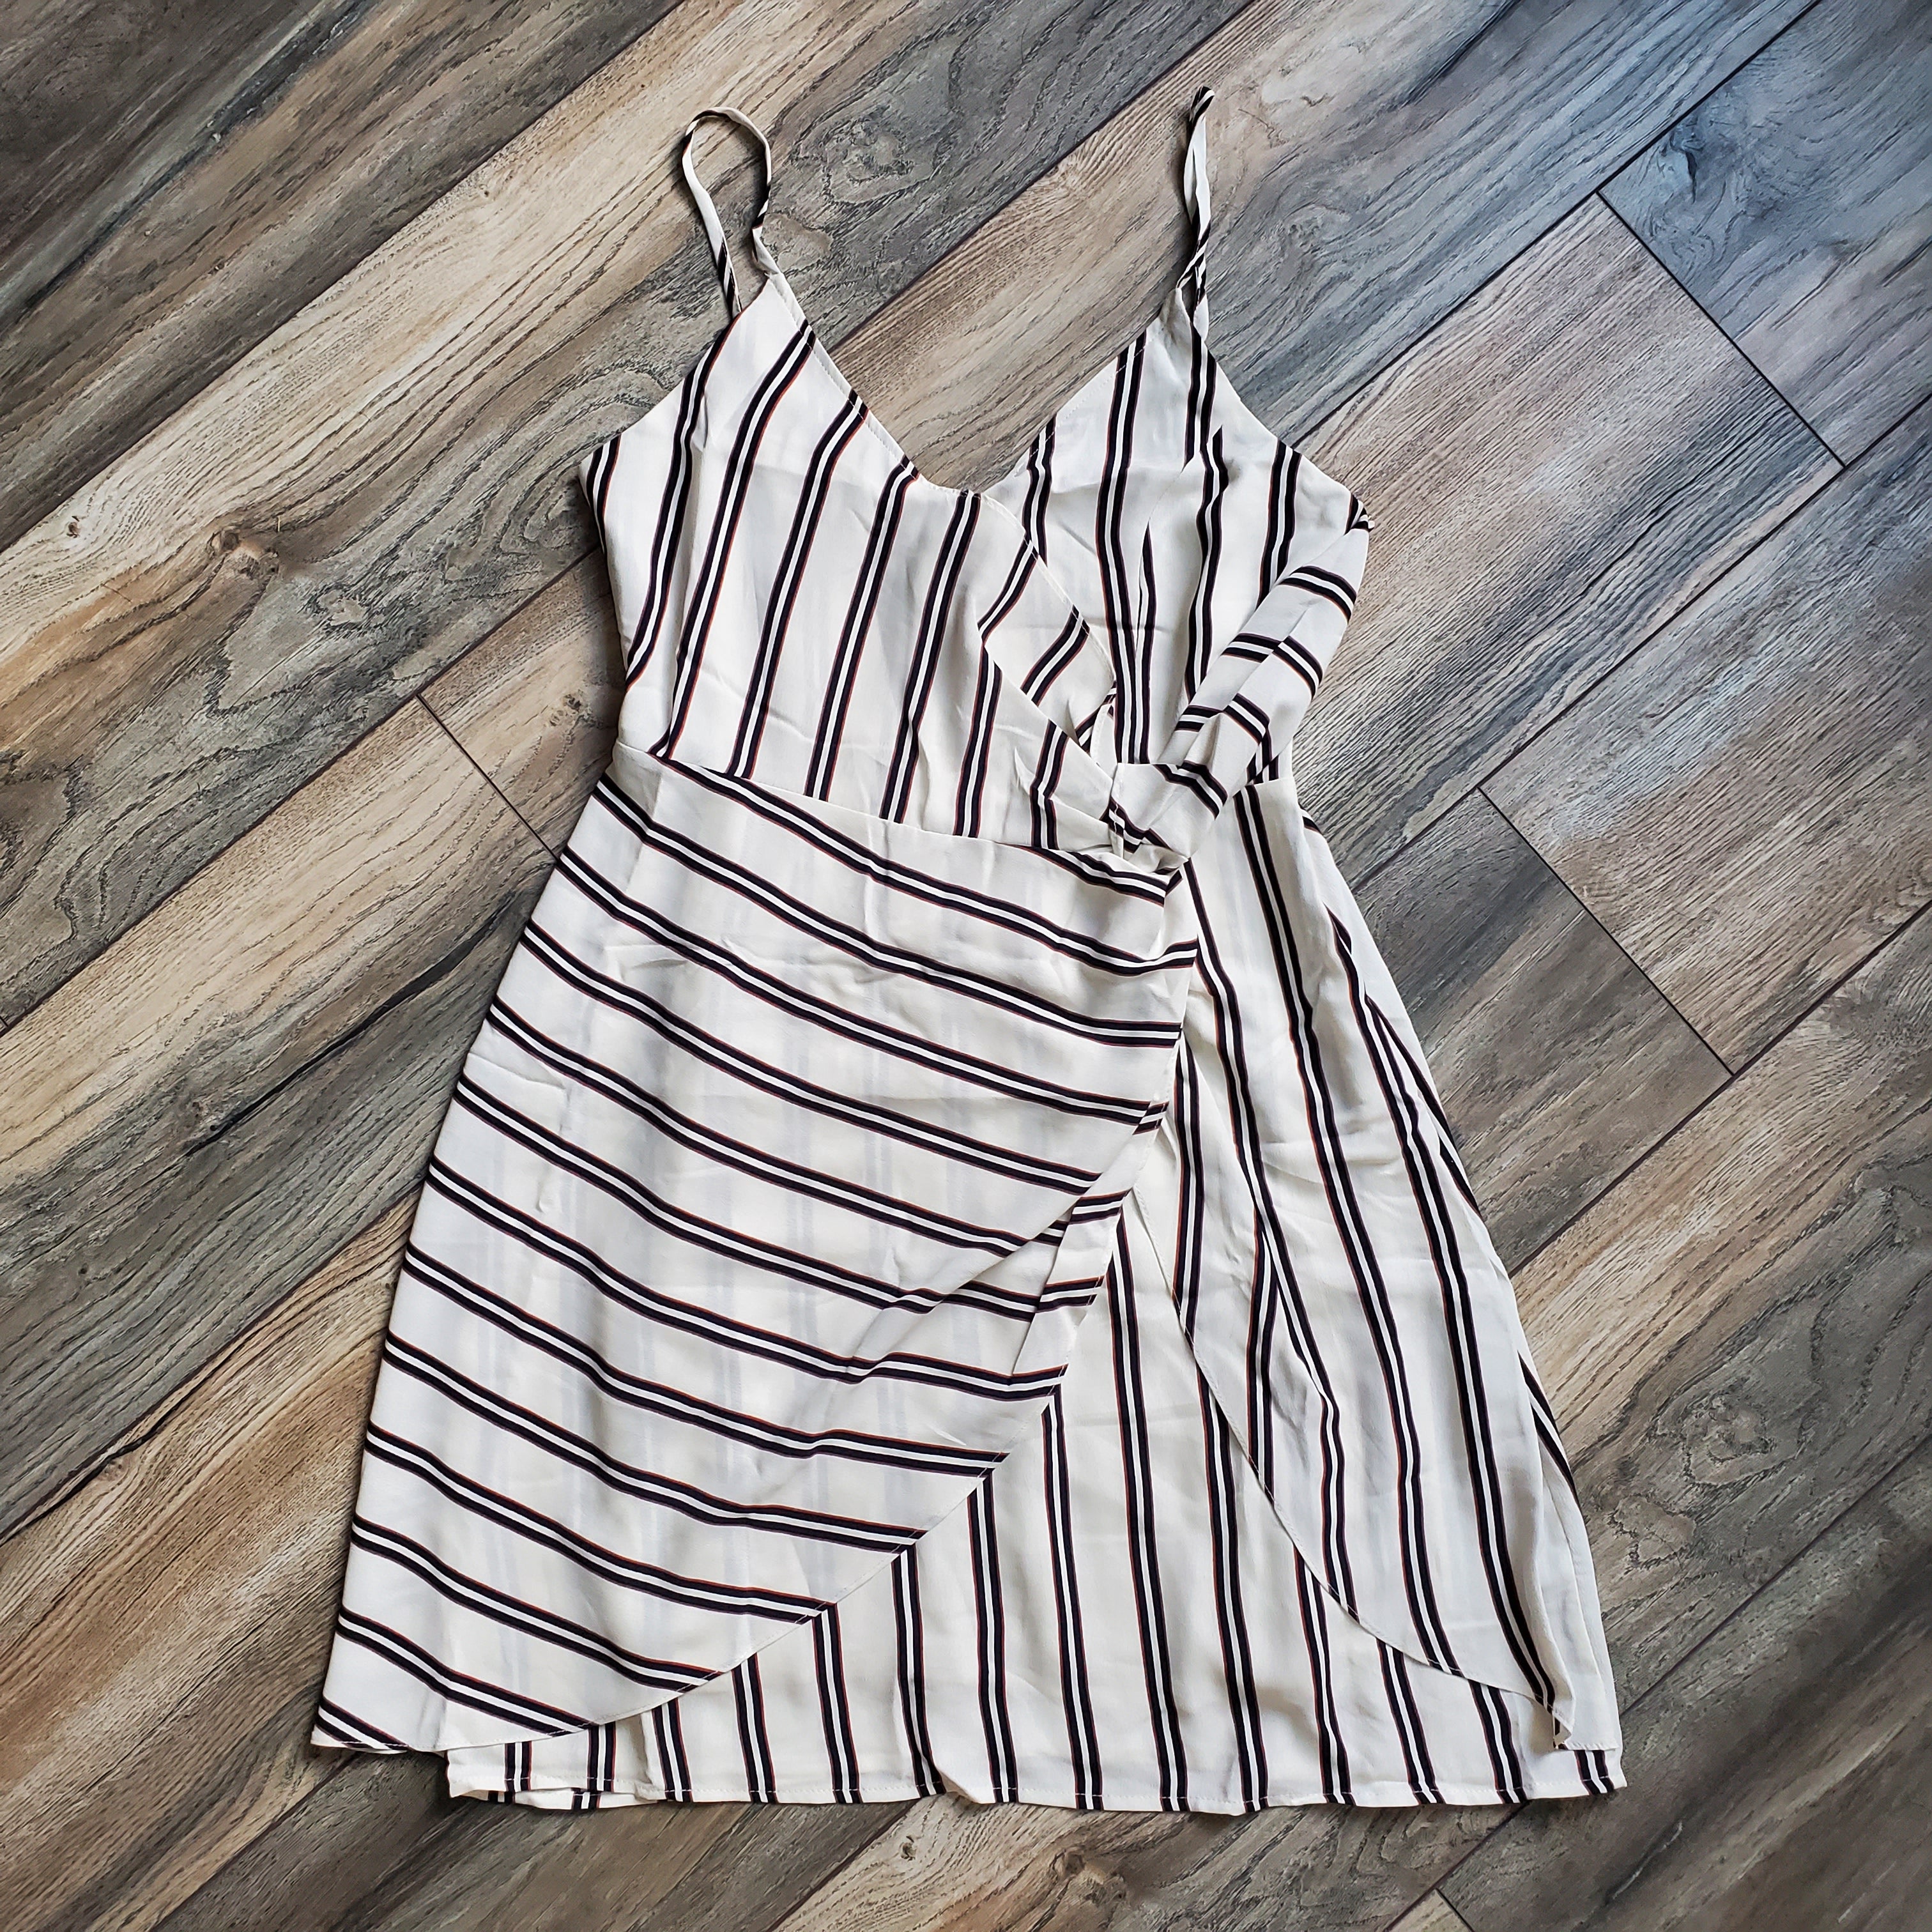 Striped White Dress